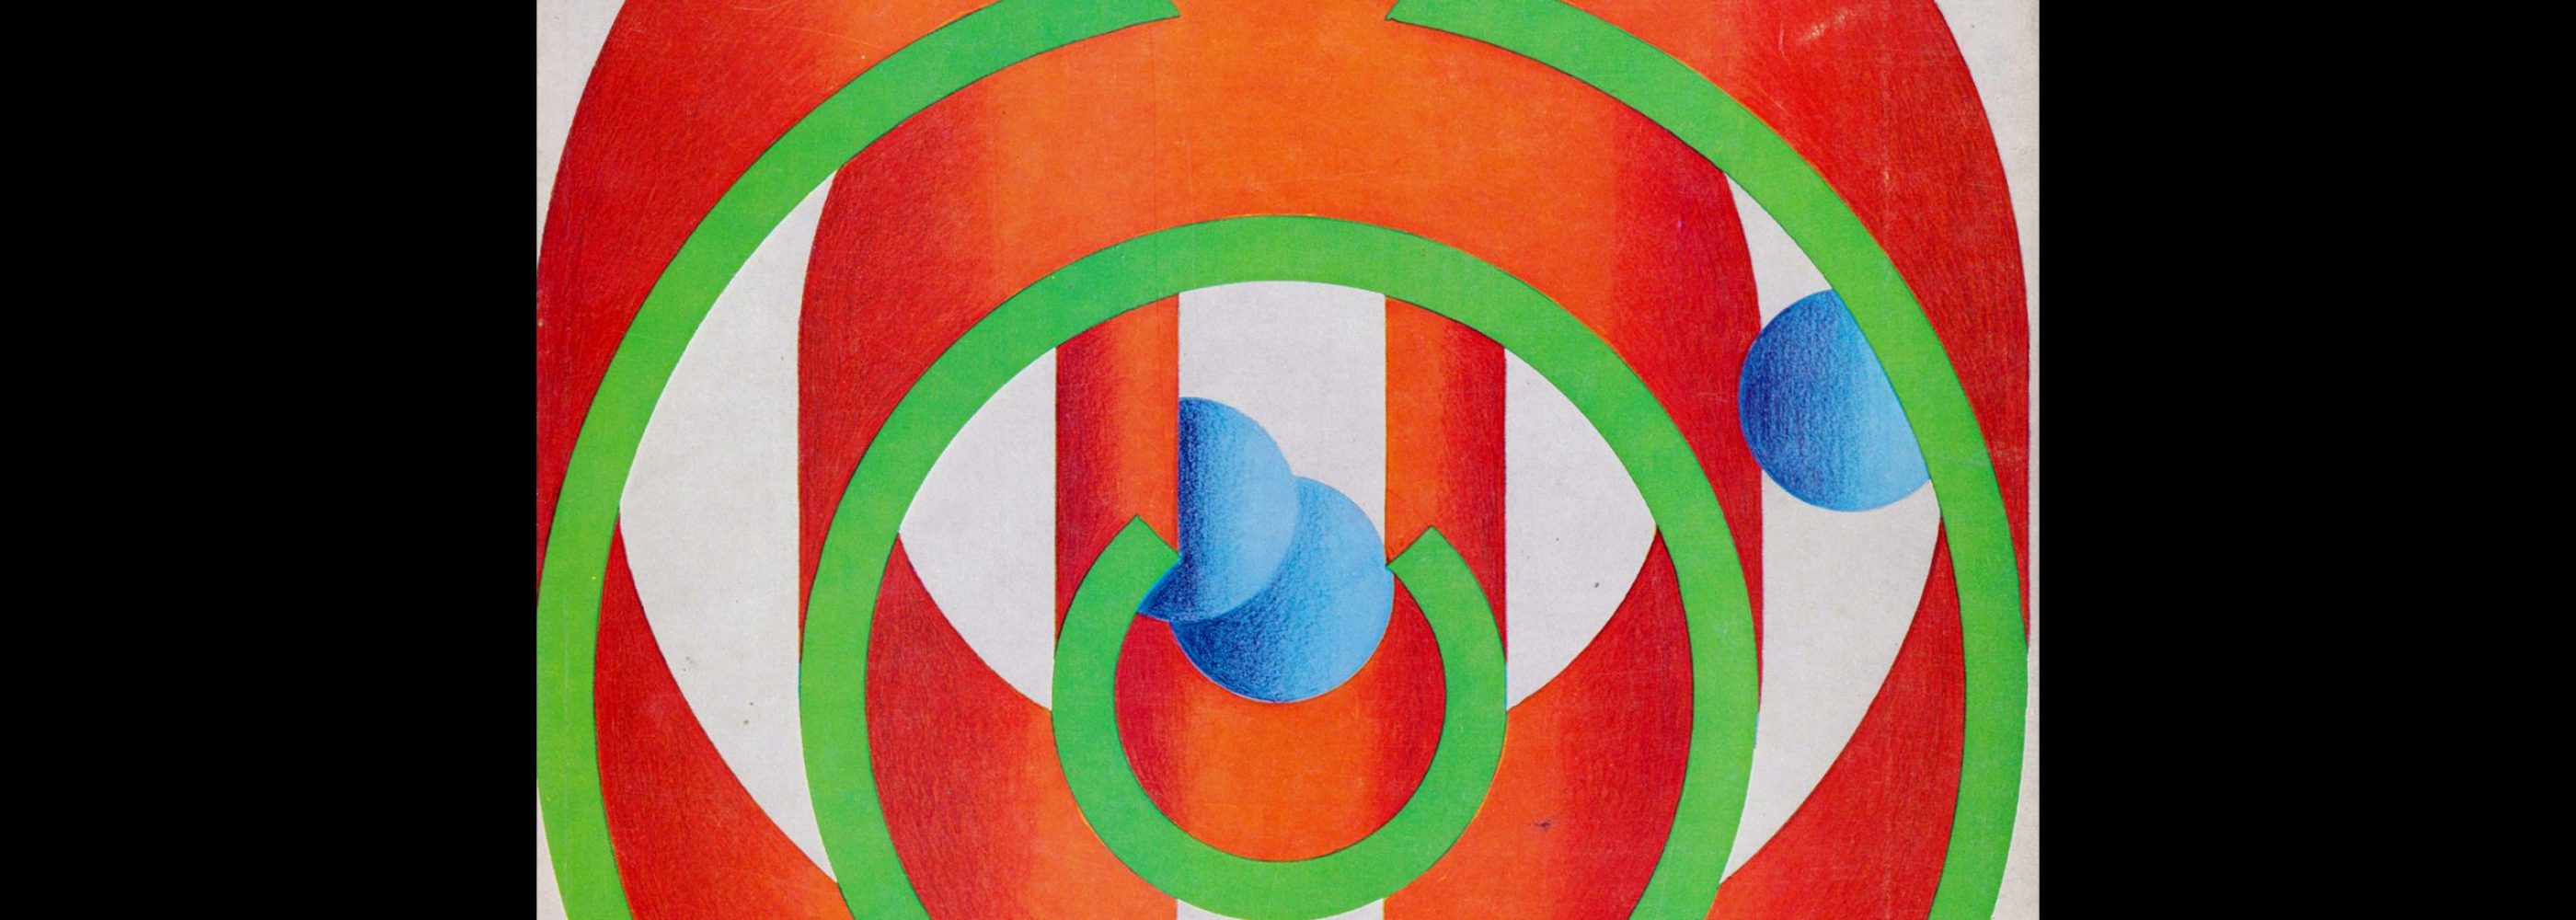 Novum Gebrauchsgraphik, 2, 1973. Cover design by Toni Blank